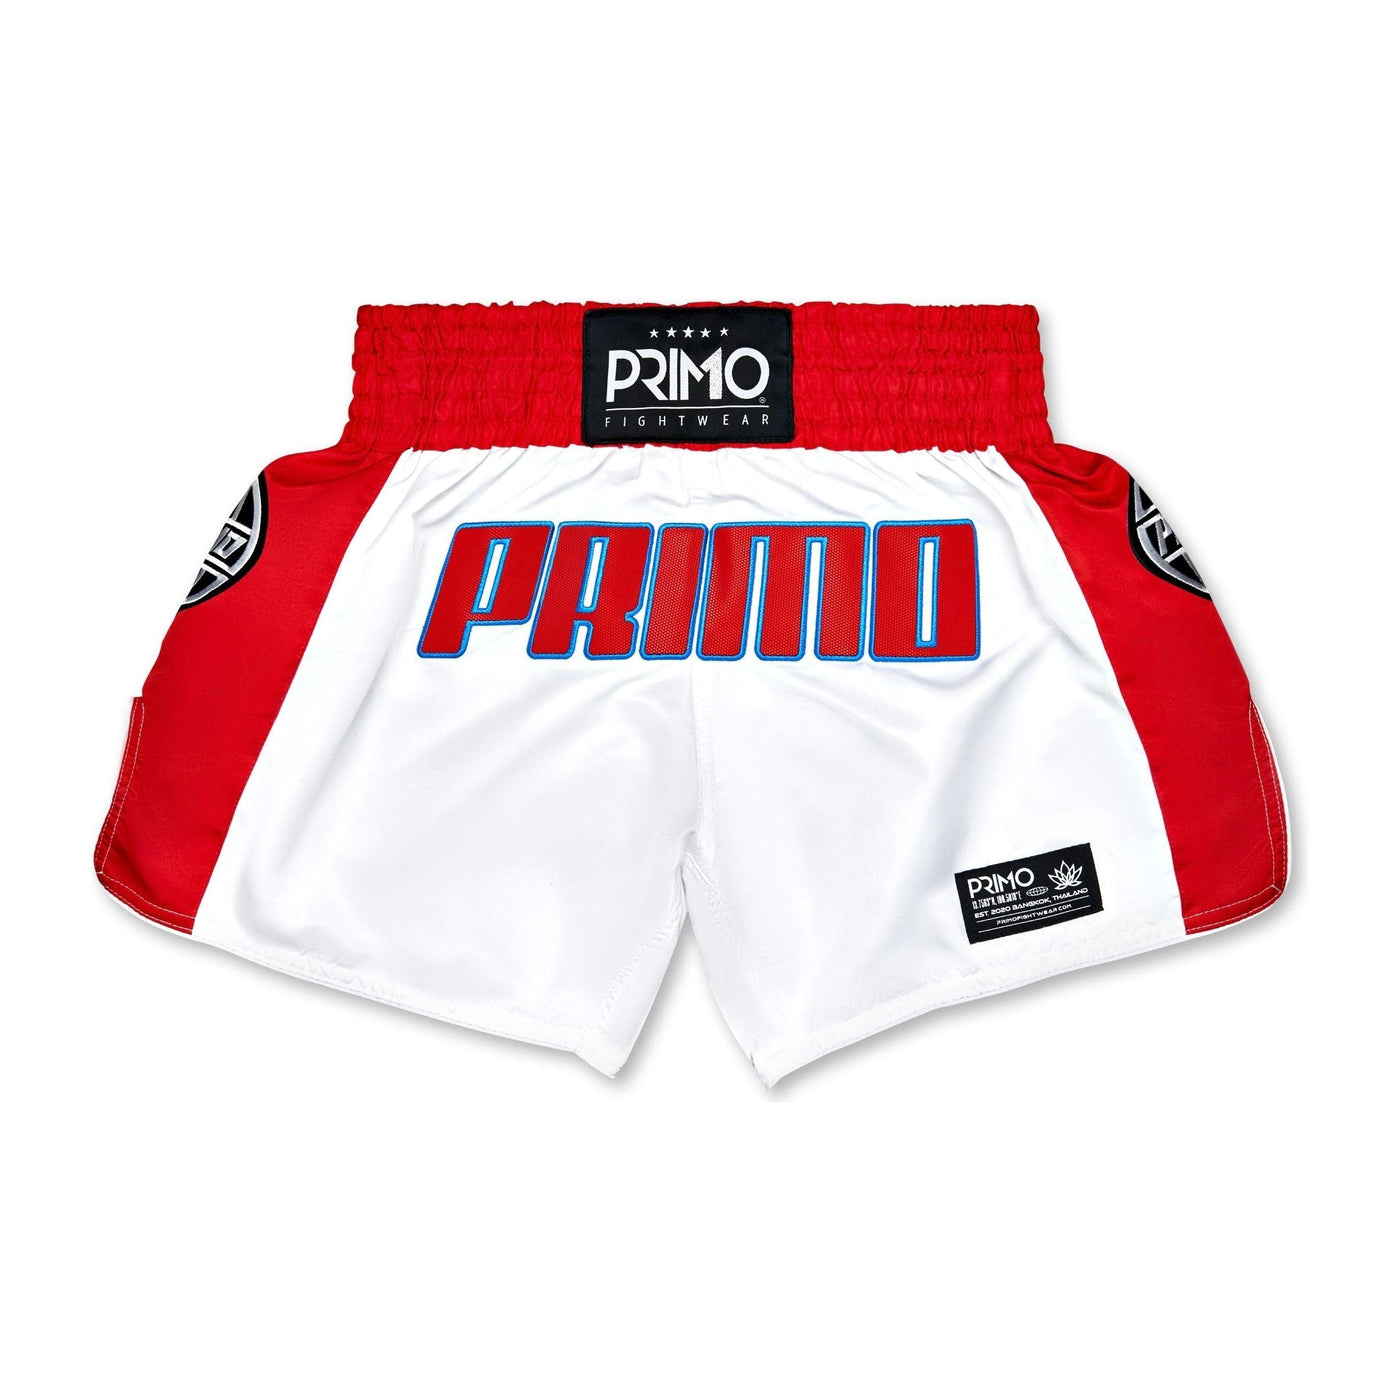 Primo Muay Thai Shorts - Trinity Red - Muay Thailand